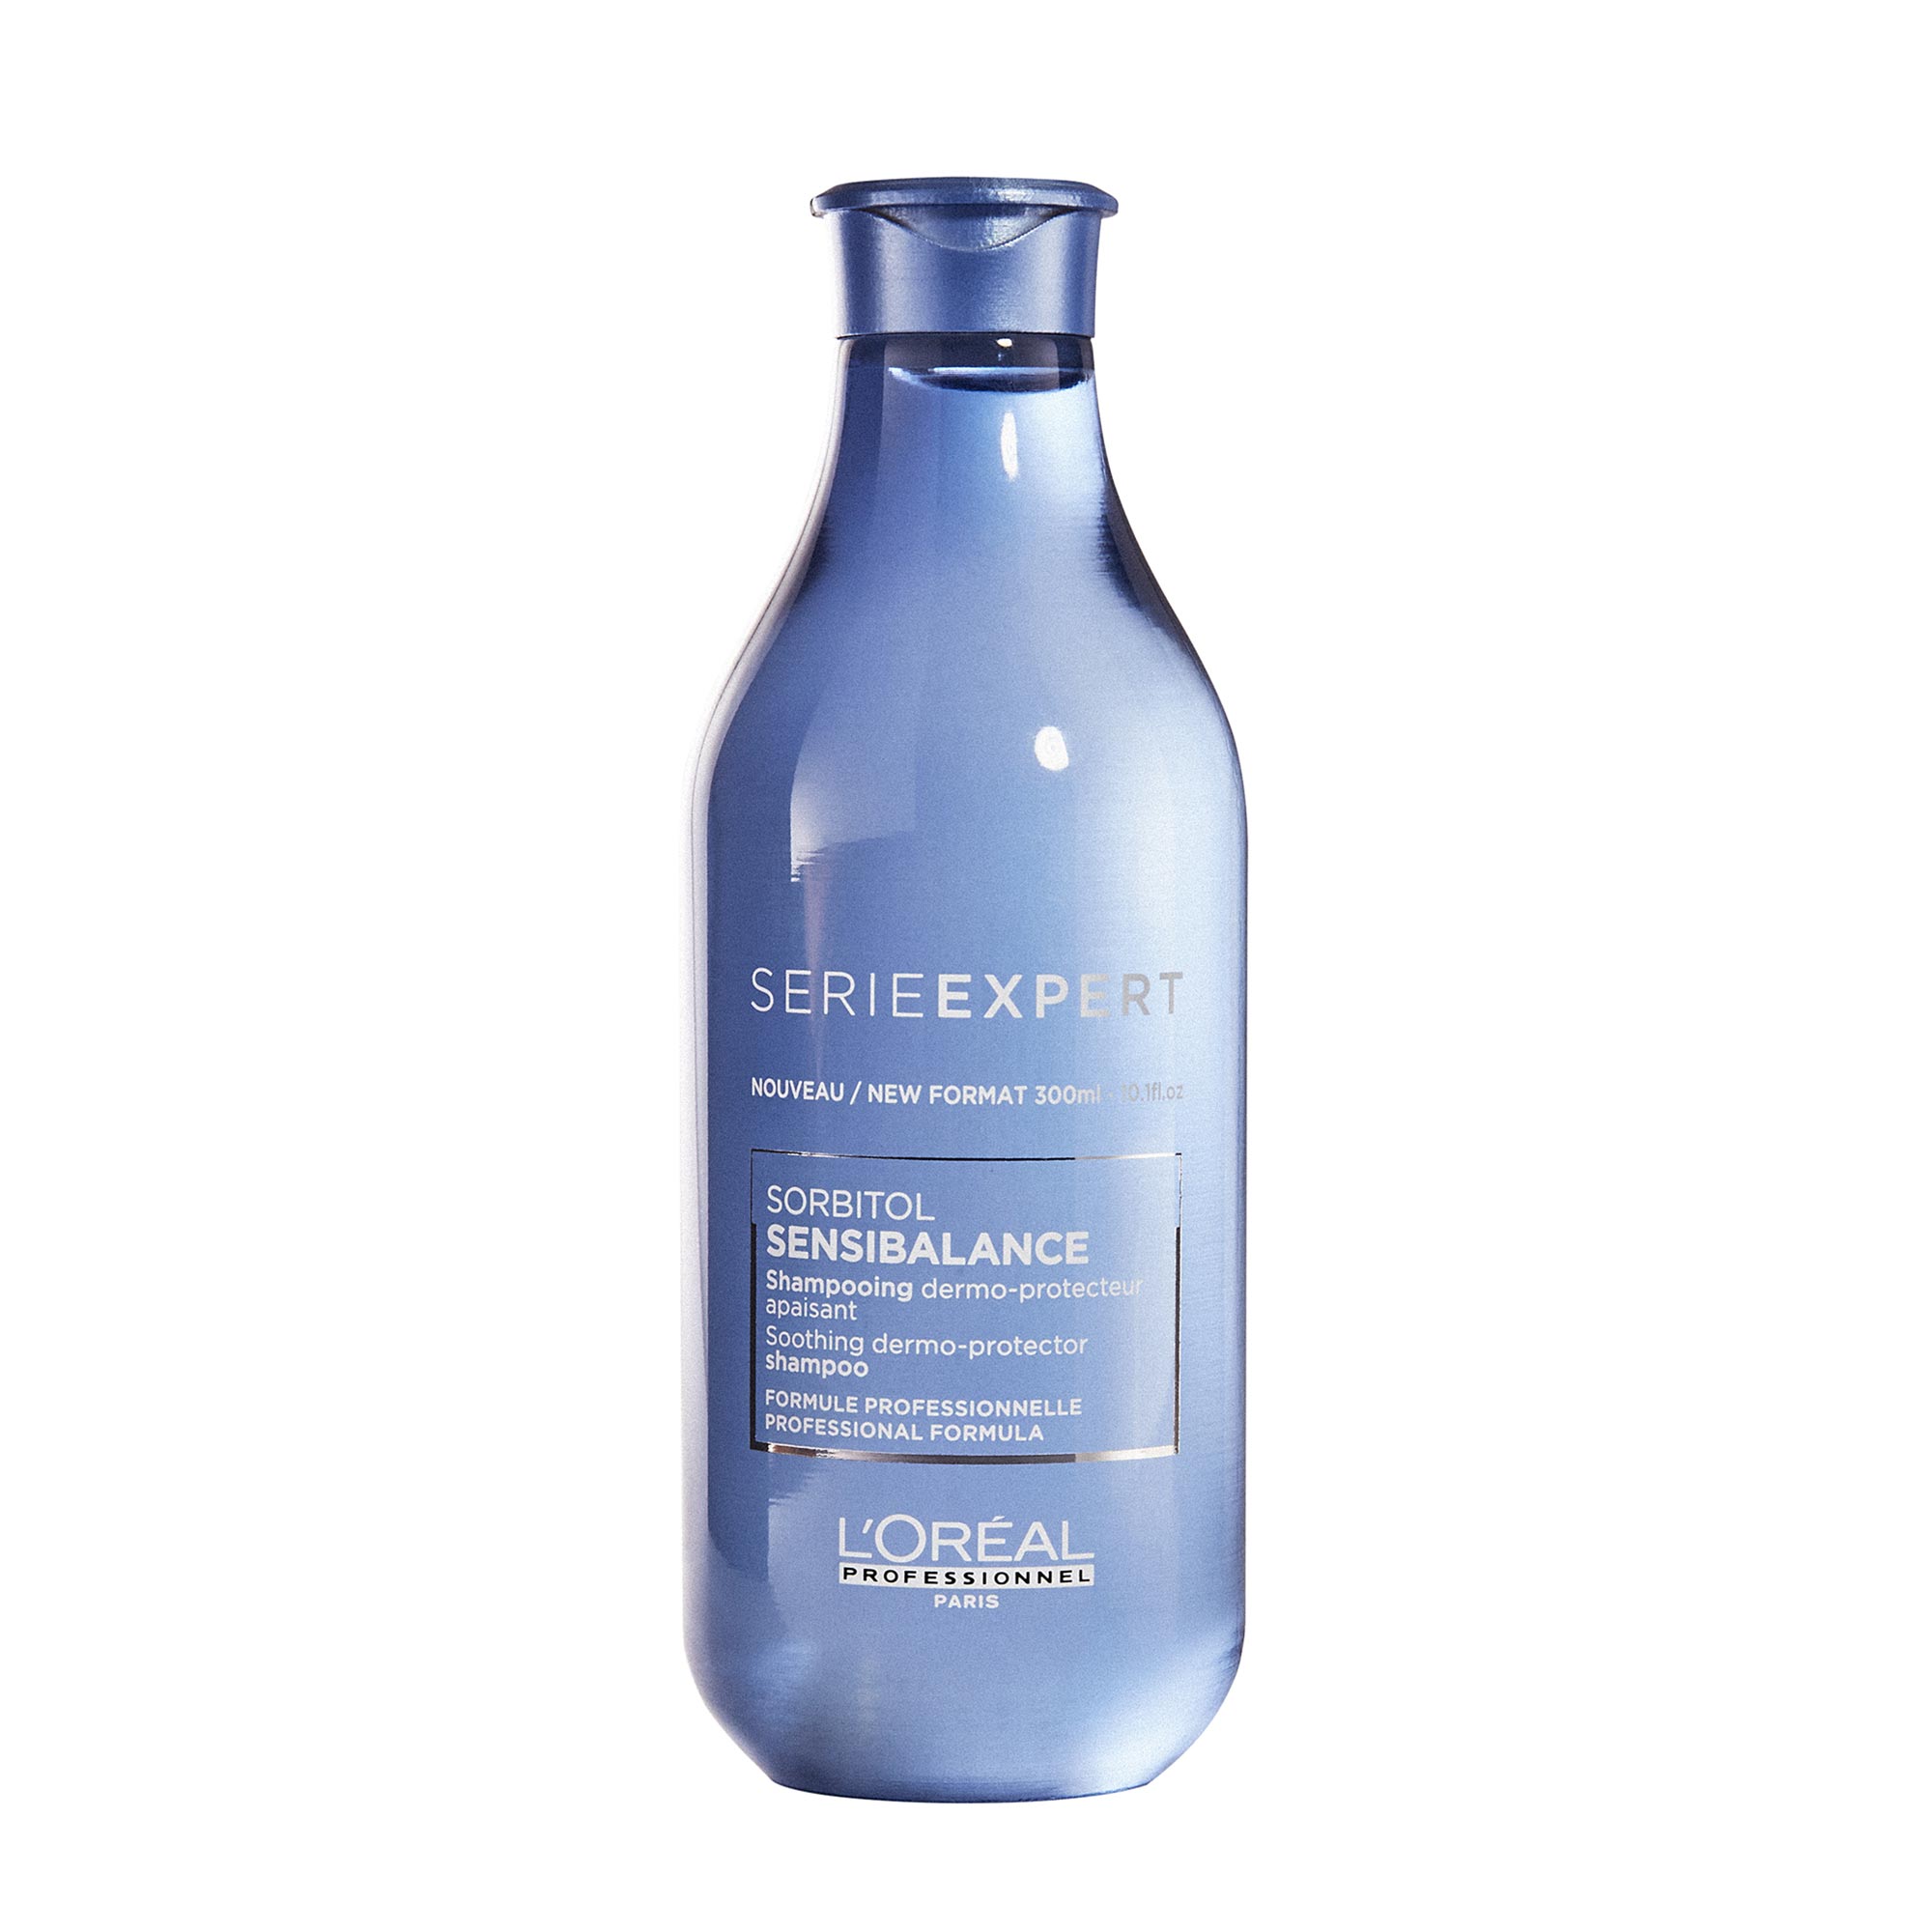 L'Oréal Professionnel LOrealProfessionnel Sensi Balance Shampoo, 300